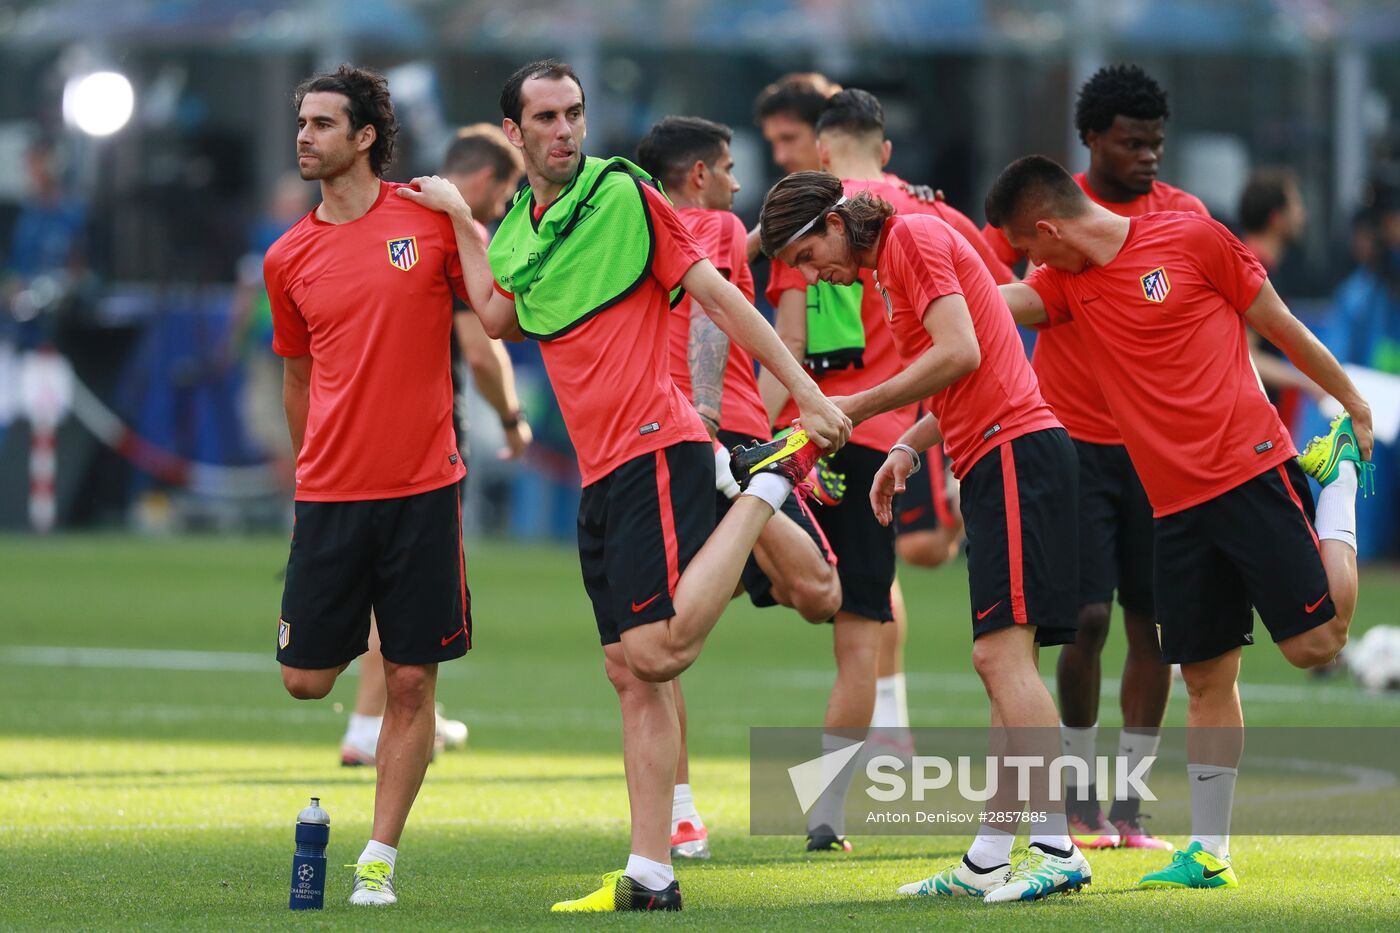 Football. Champions League. Atletico training session